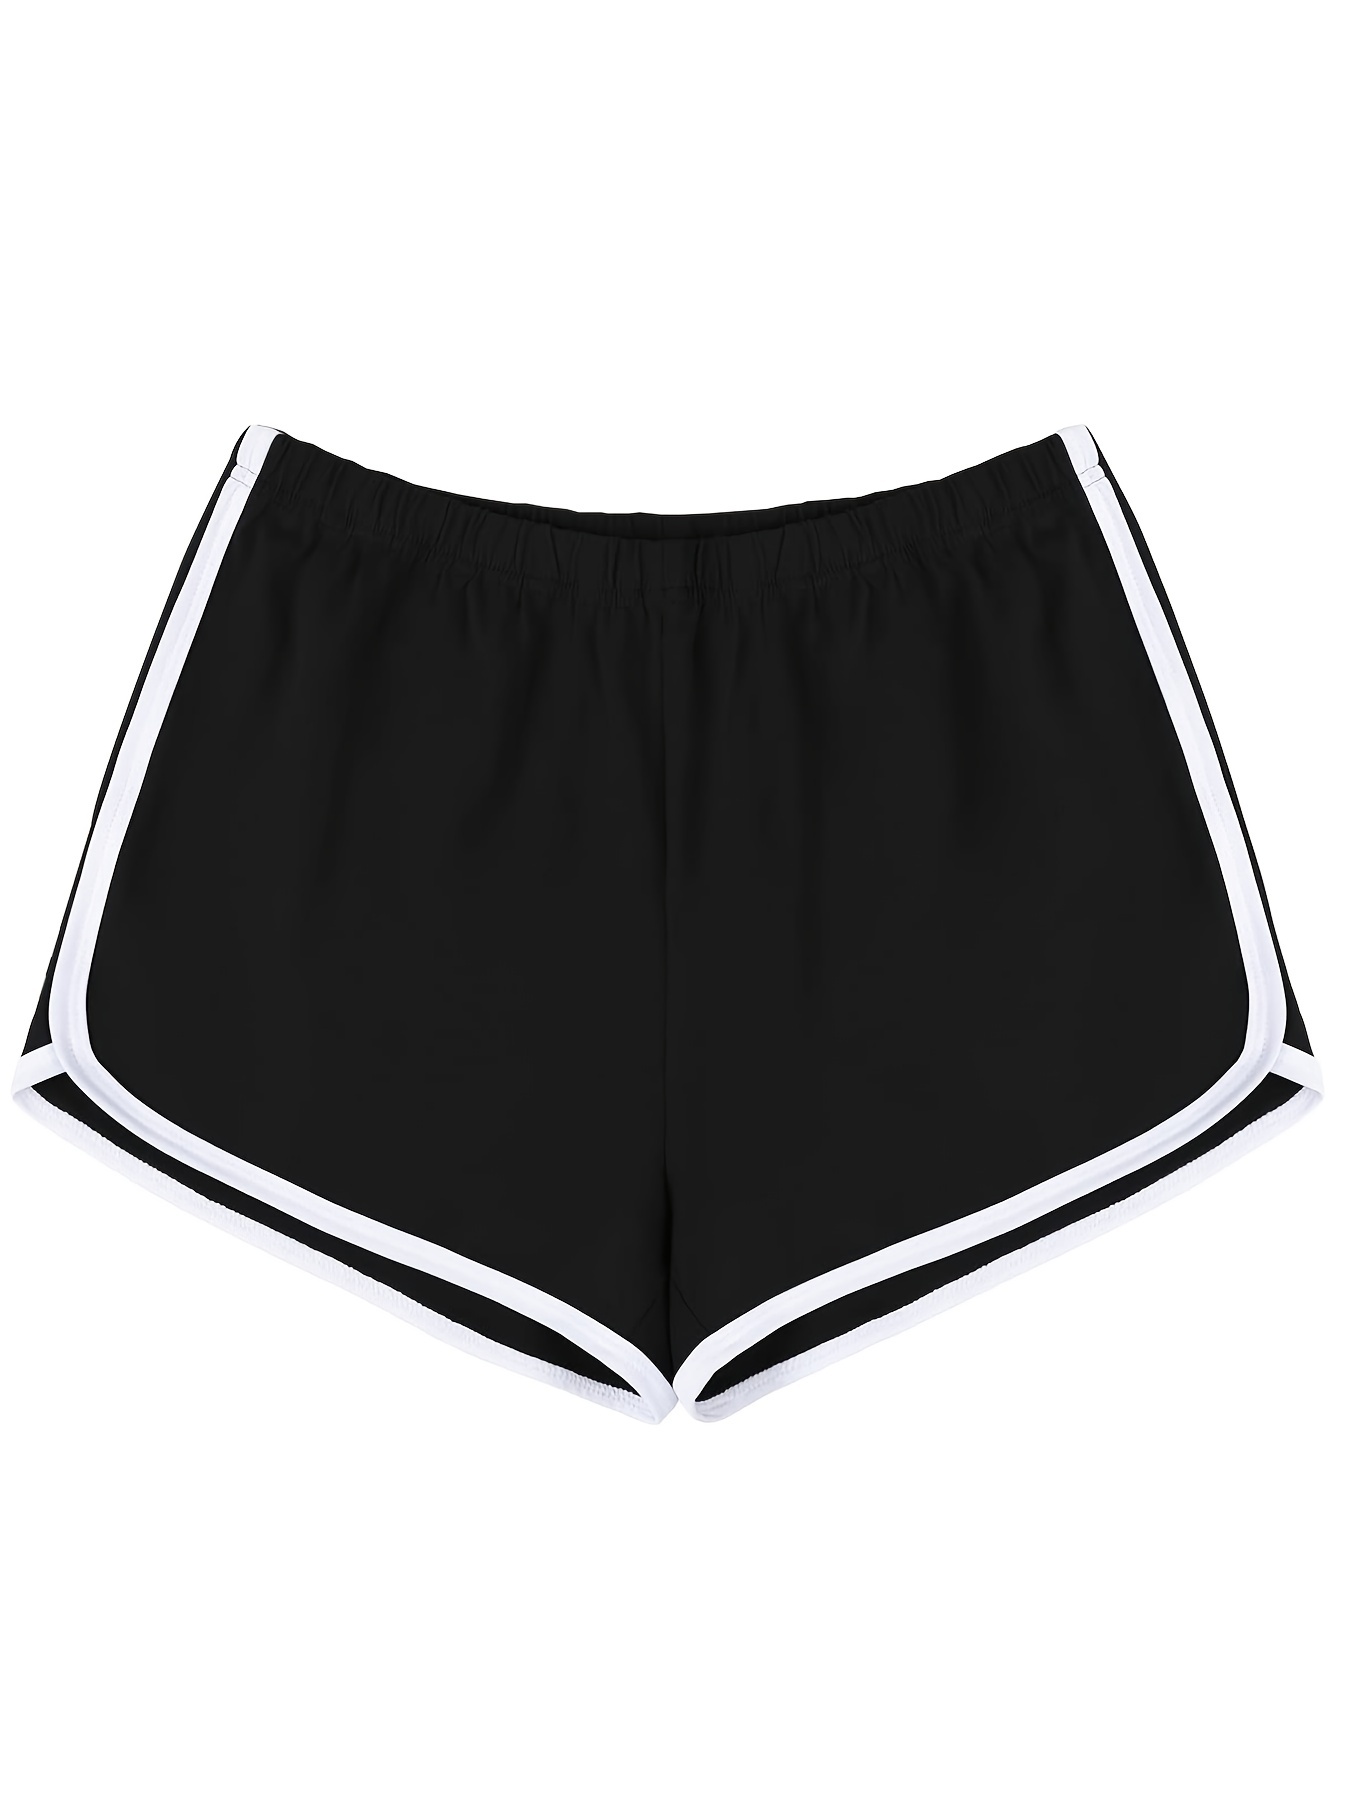 Buy Fashiol Women's Cotton Yoga Shorts (Pack of 1)  (507_short_28_MH004_black & skin_S) at